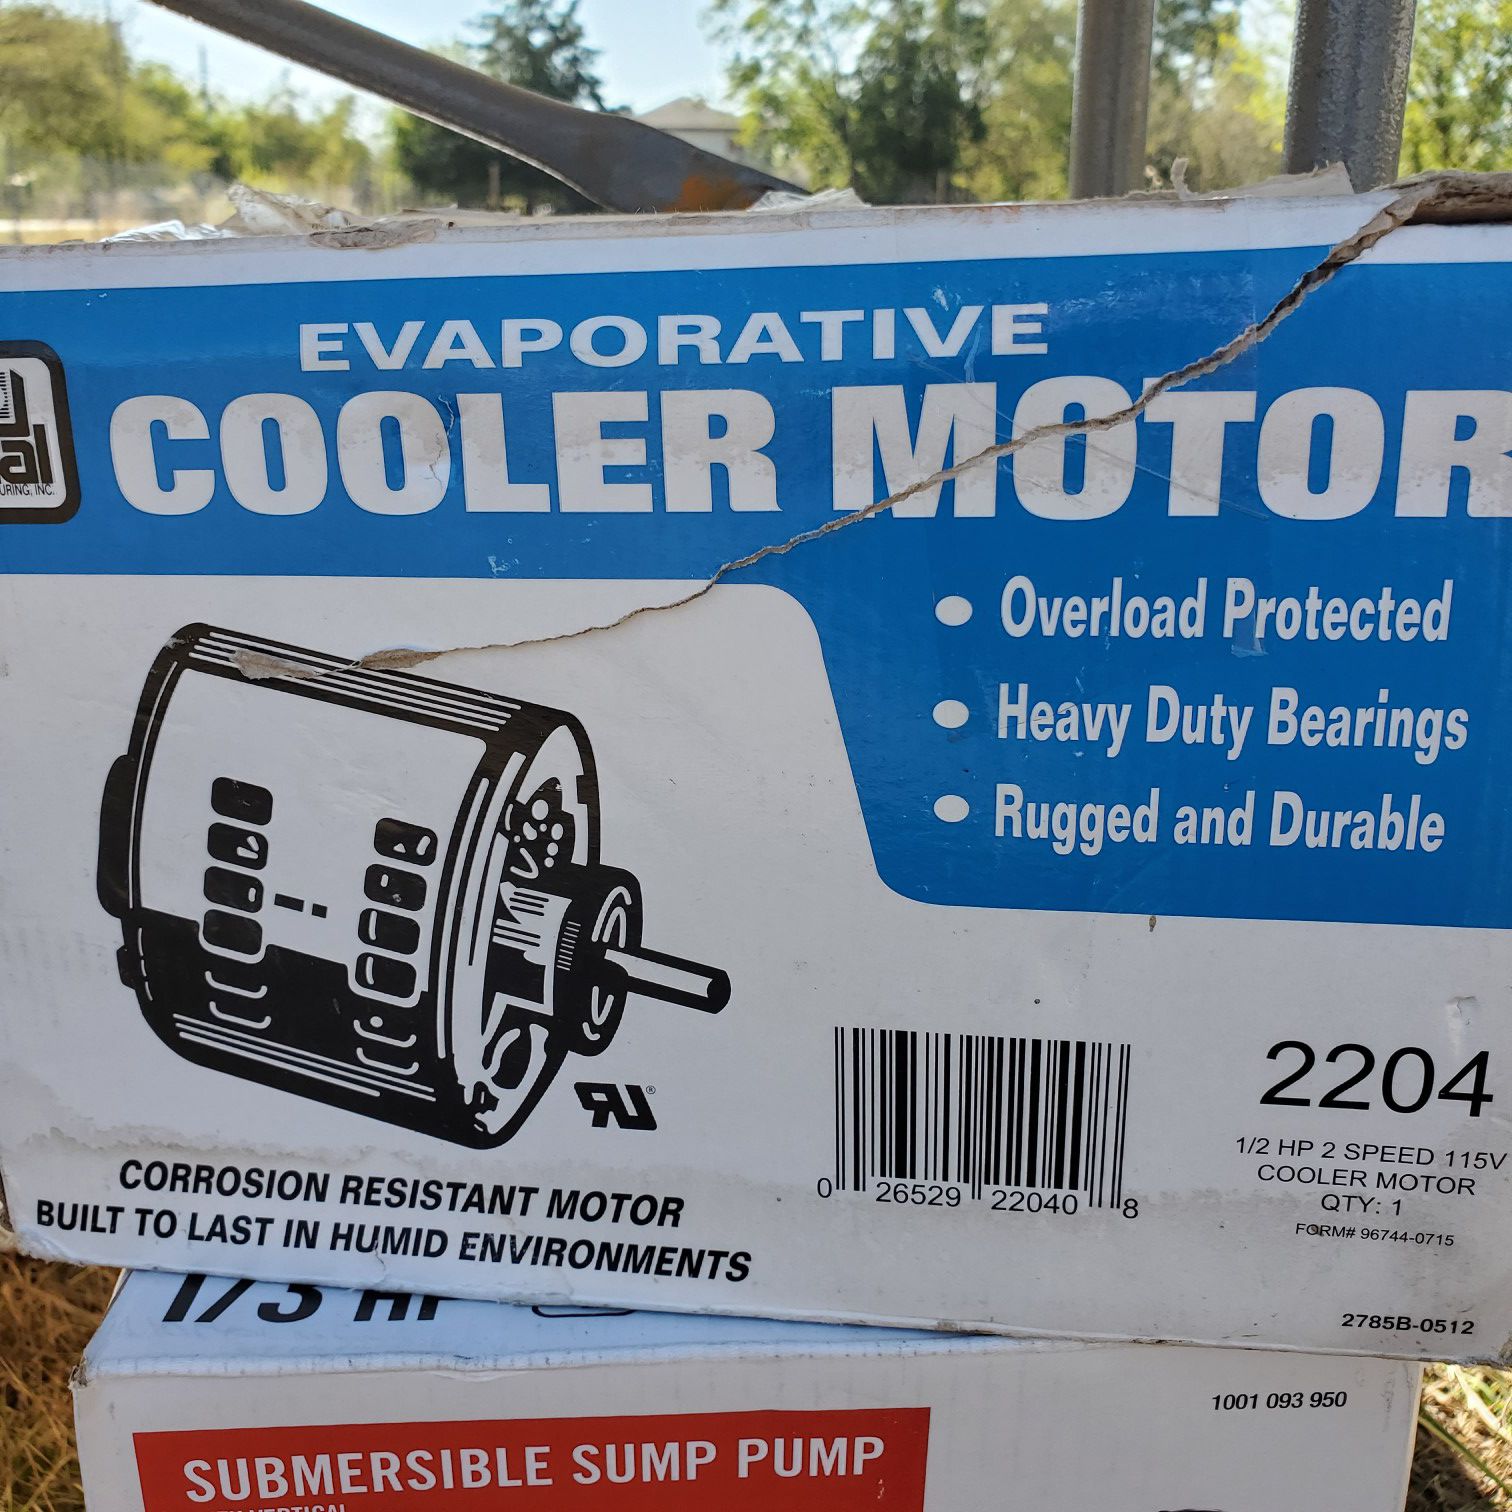 Cooler motor